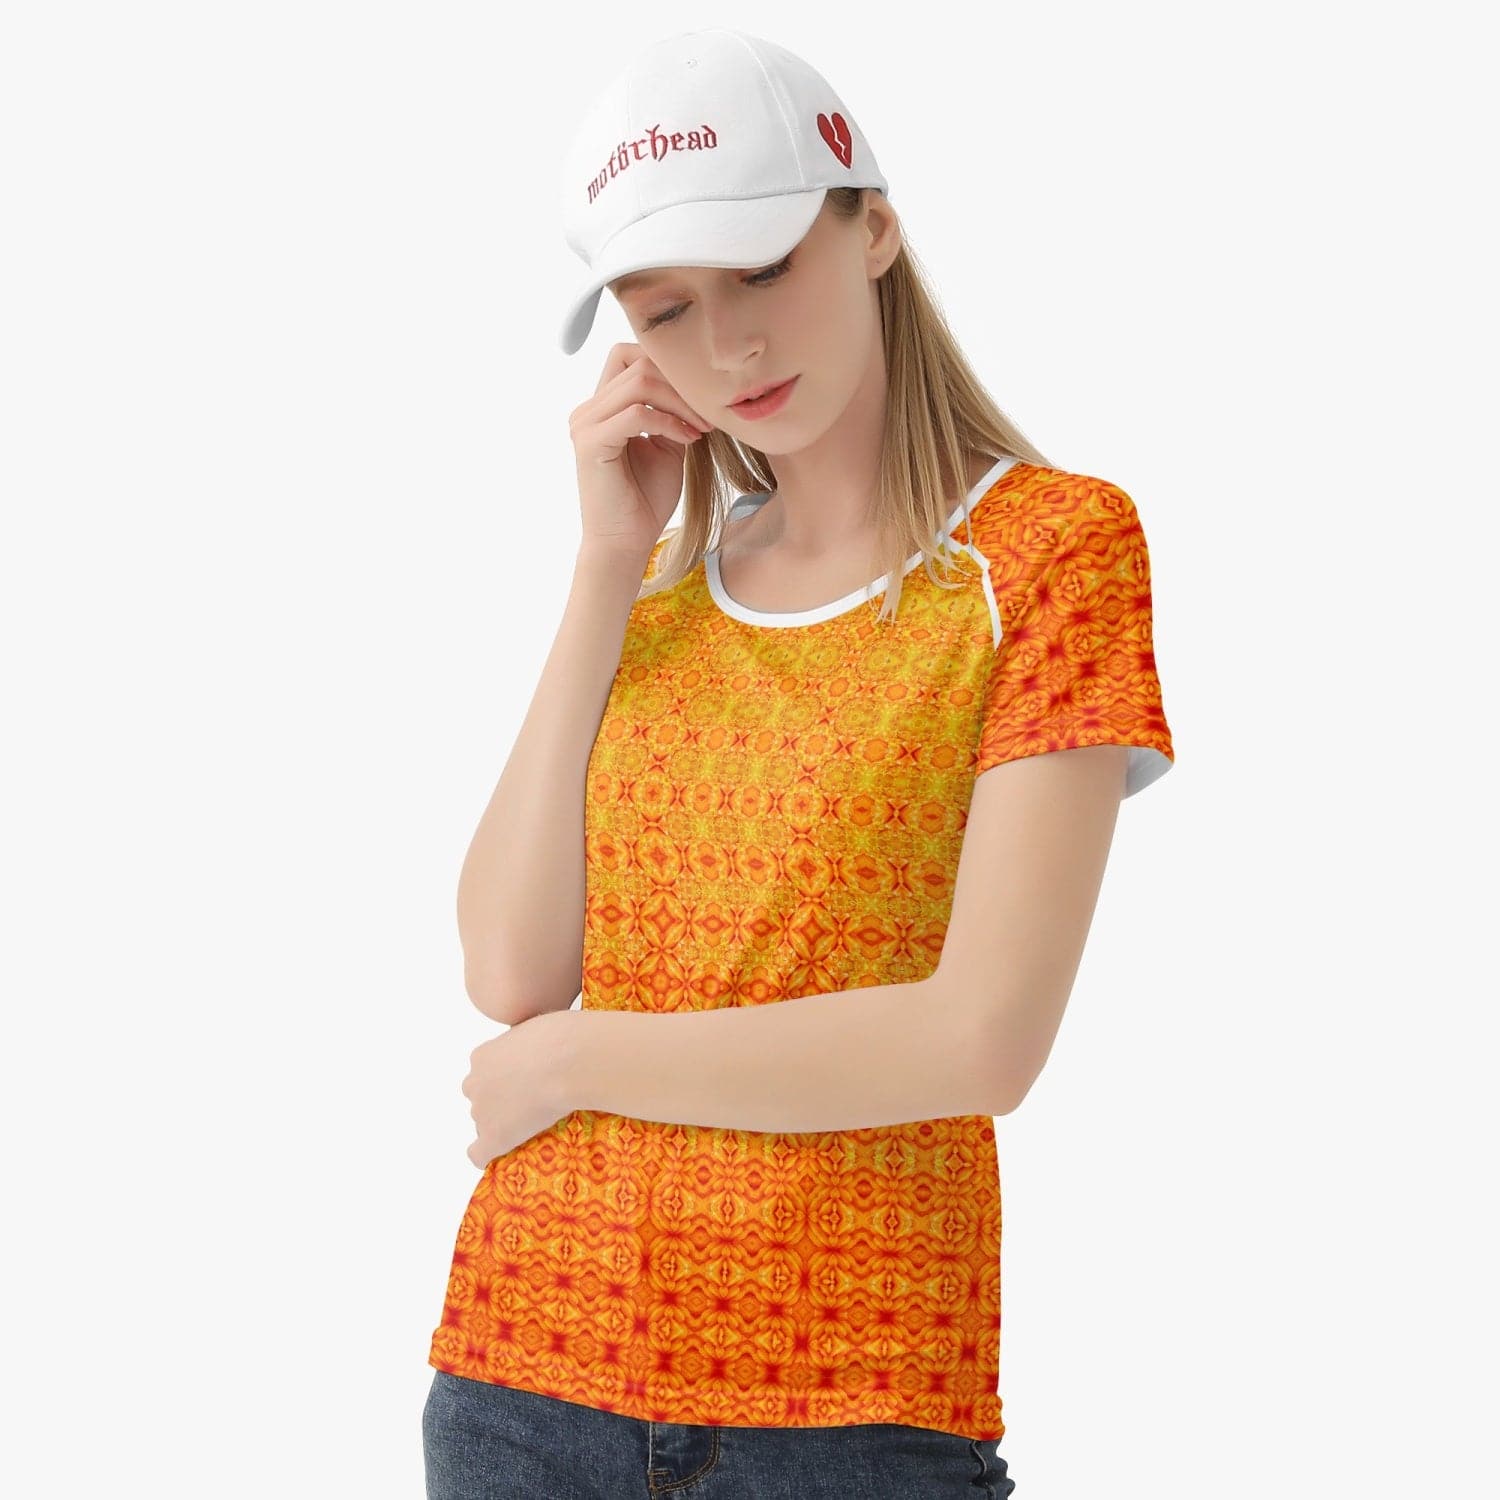 Solar Plexus Chacra  Handmade Yoga Top for  Women sports T-shirt, by Sensus Studio Design